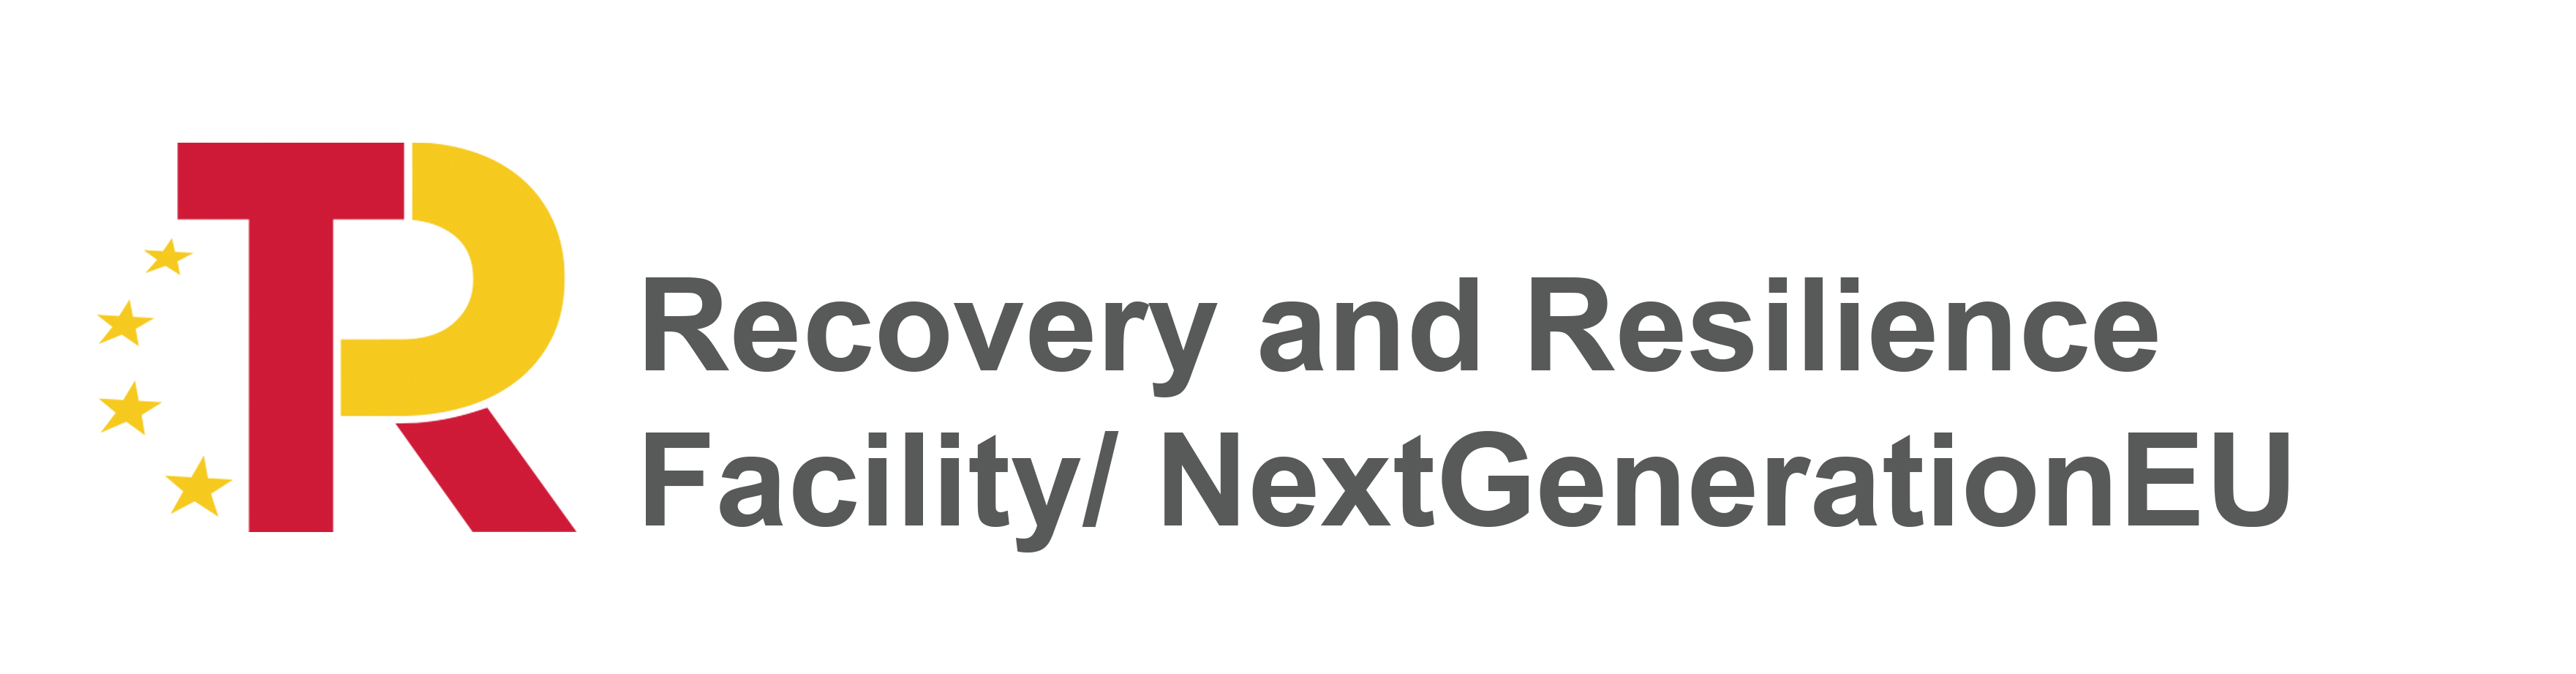 Recovery and Resilience Facility/ NextGenerationEU